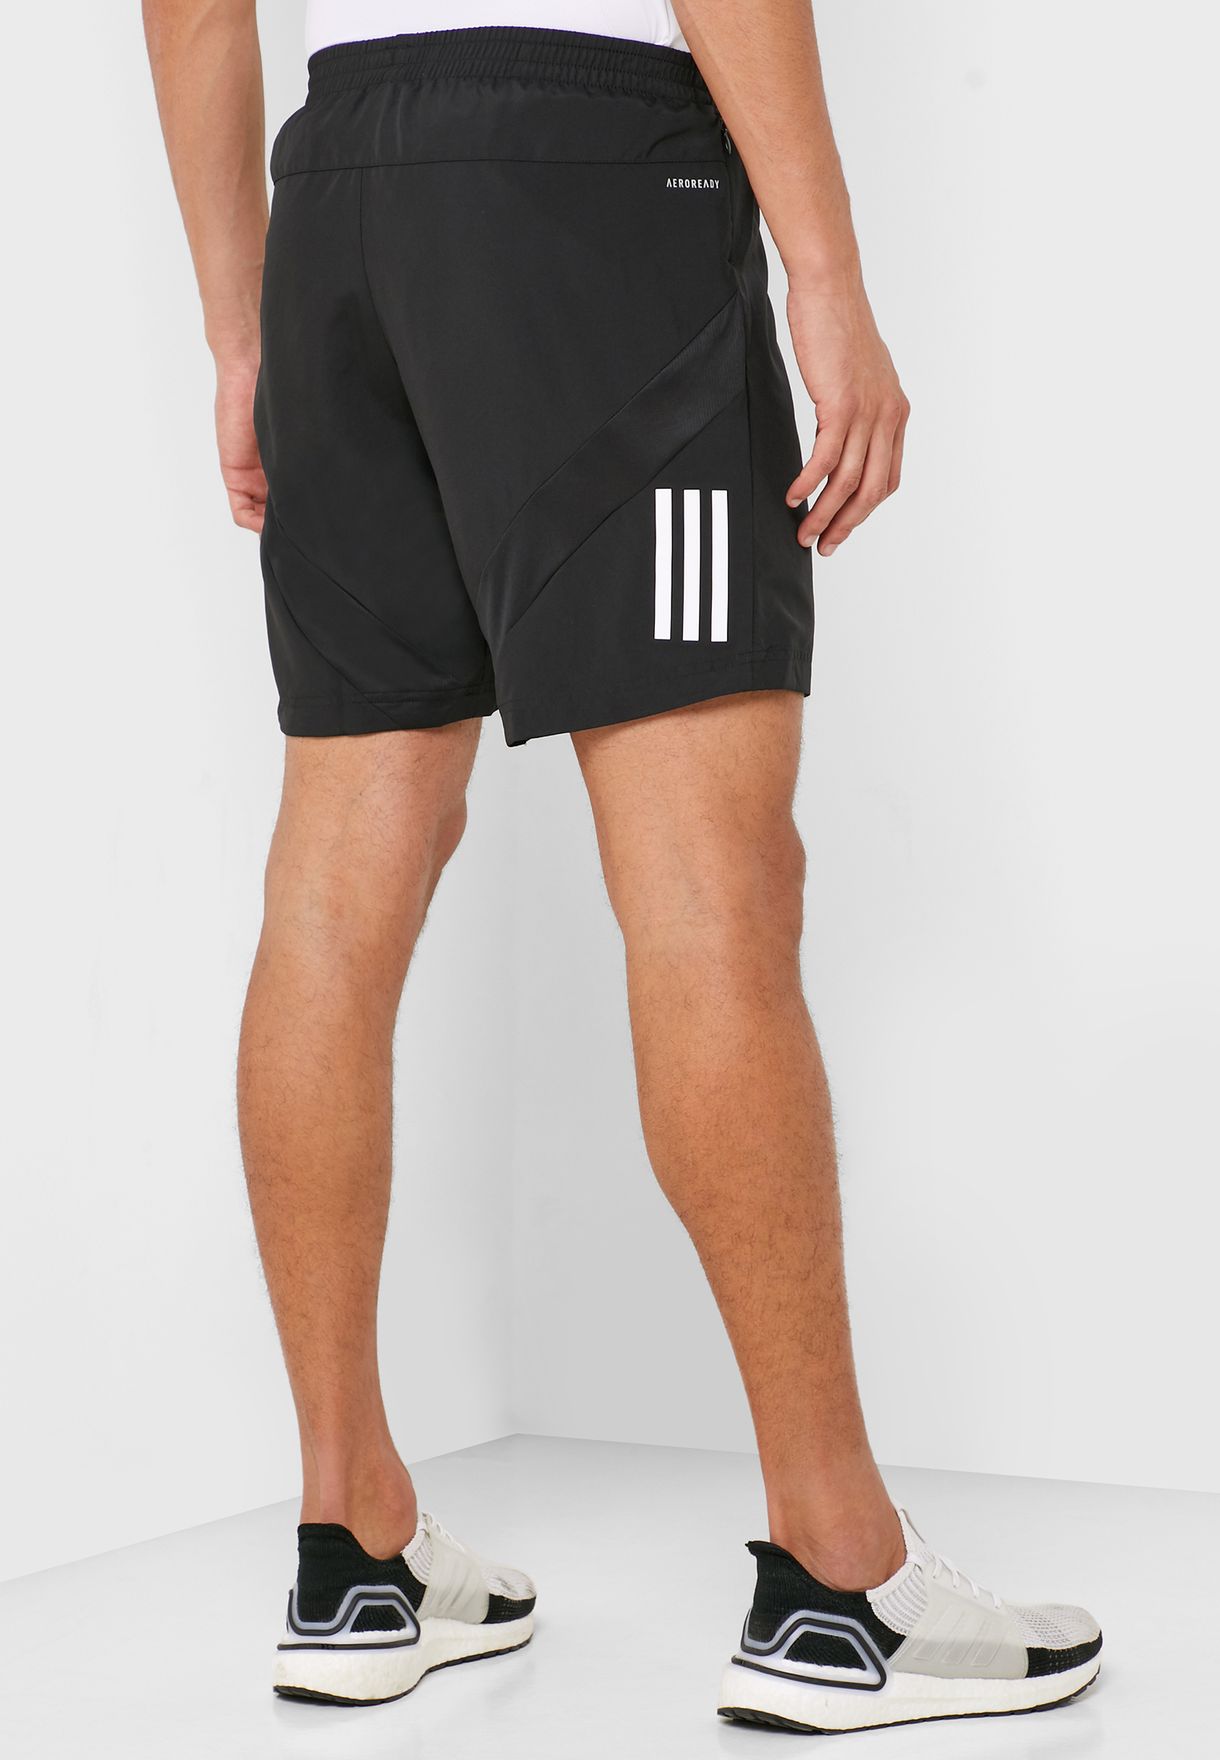 adidas performance own the run shorts